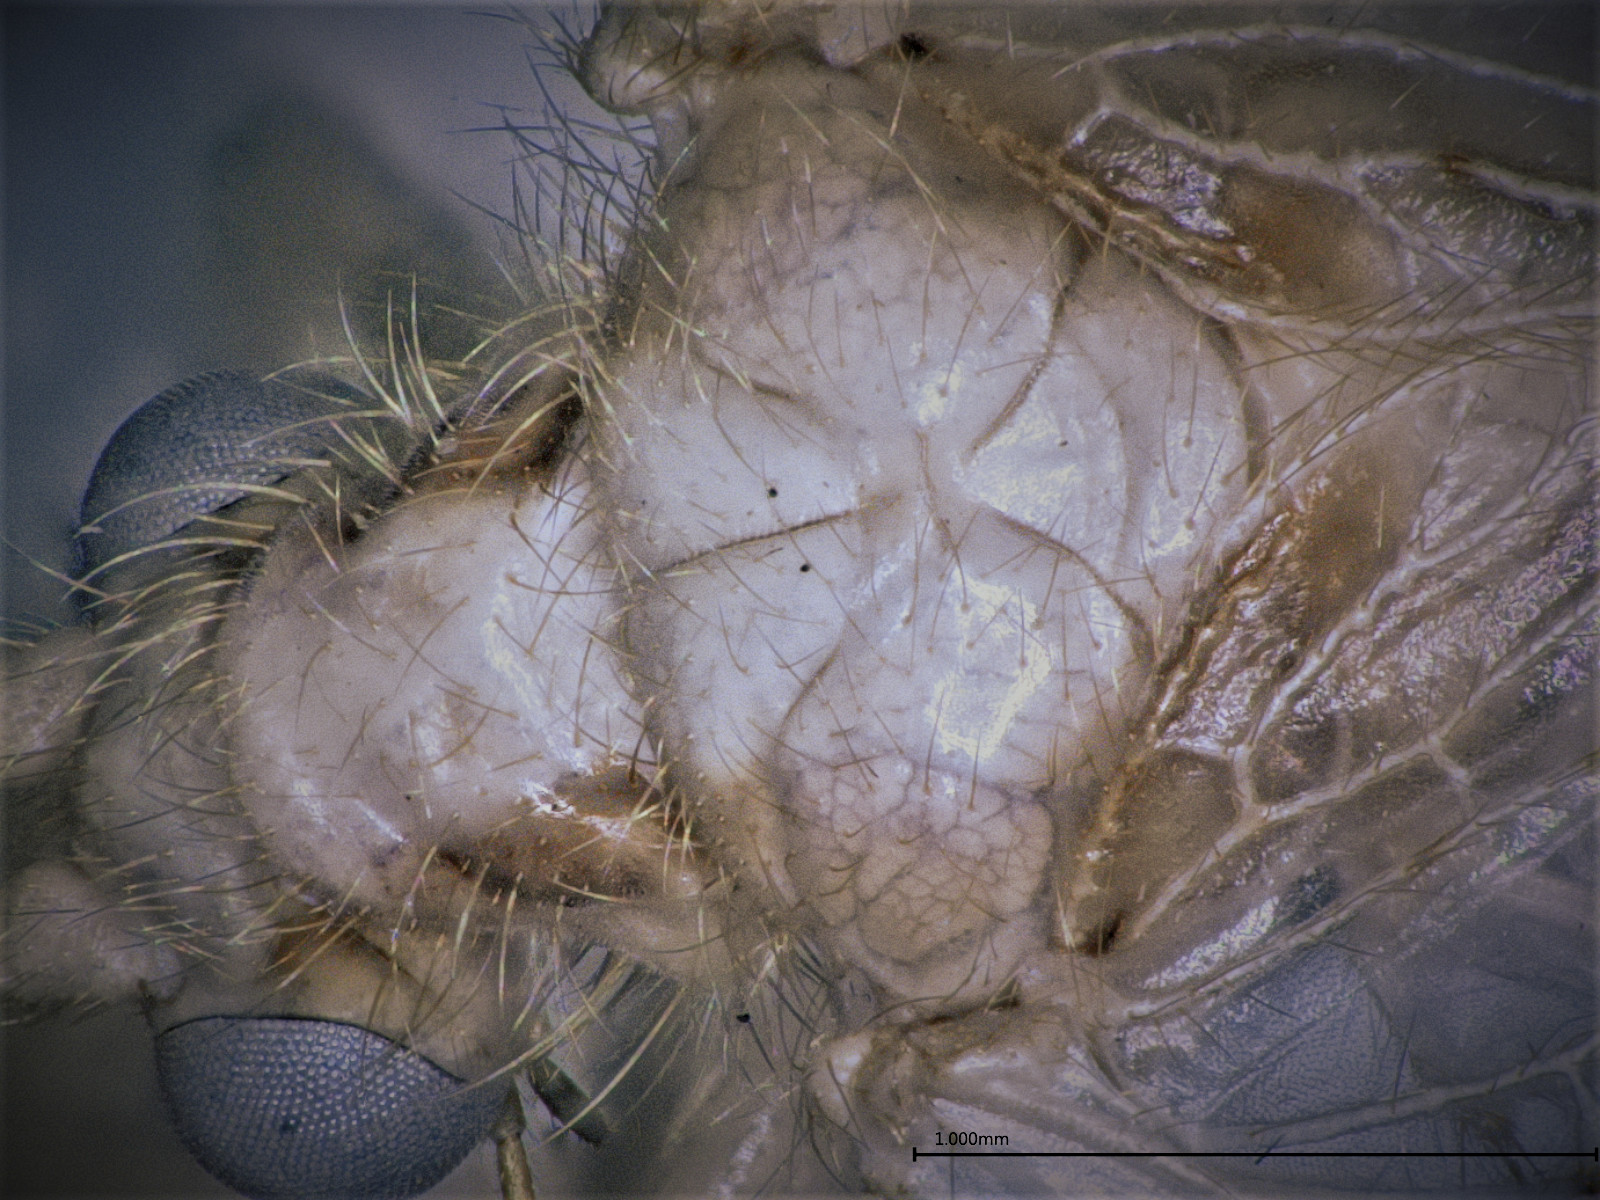 Hemerobius-costalis-dorsum-mesothoracic-dorsal-ventral-musculature-visible